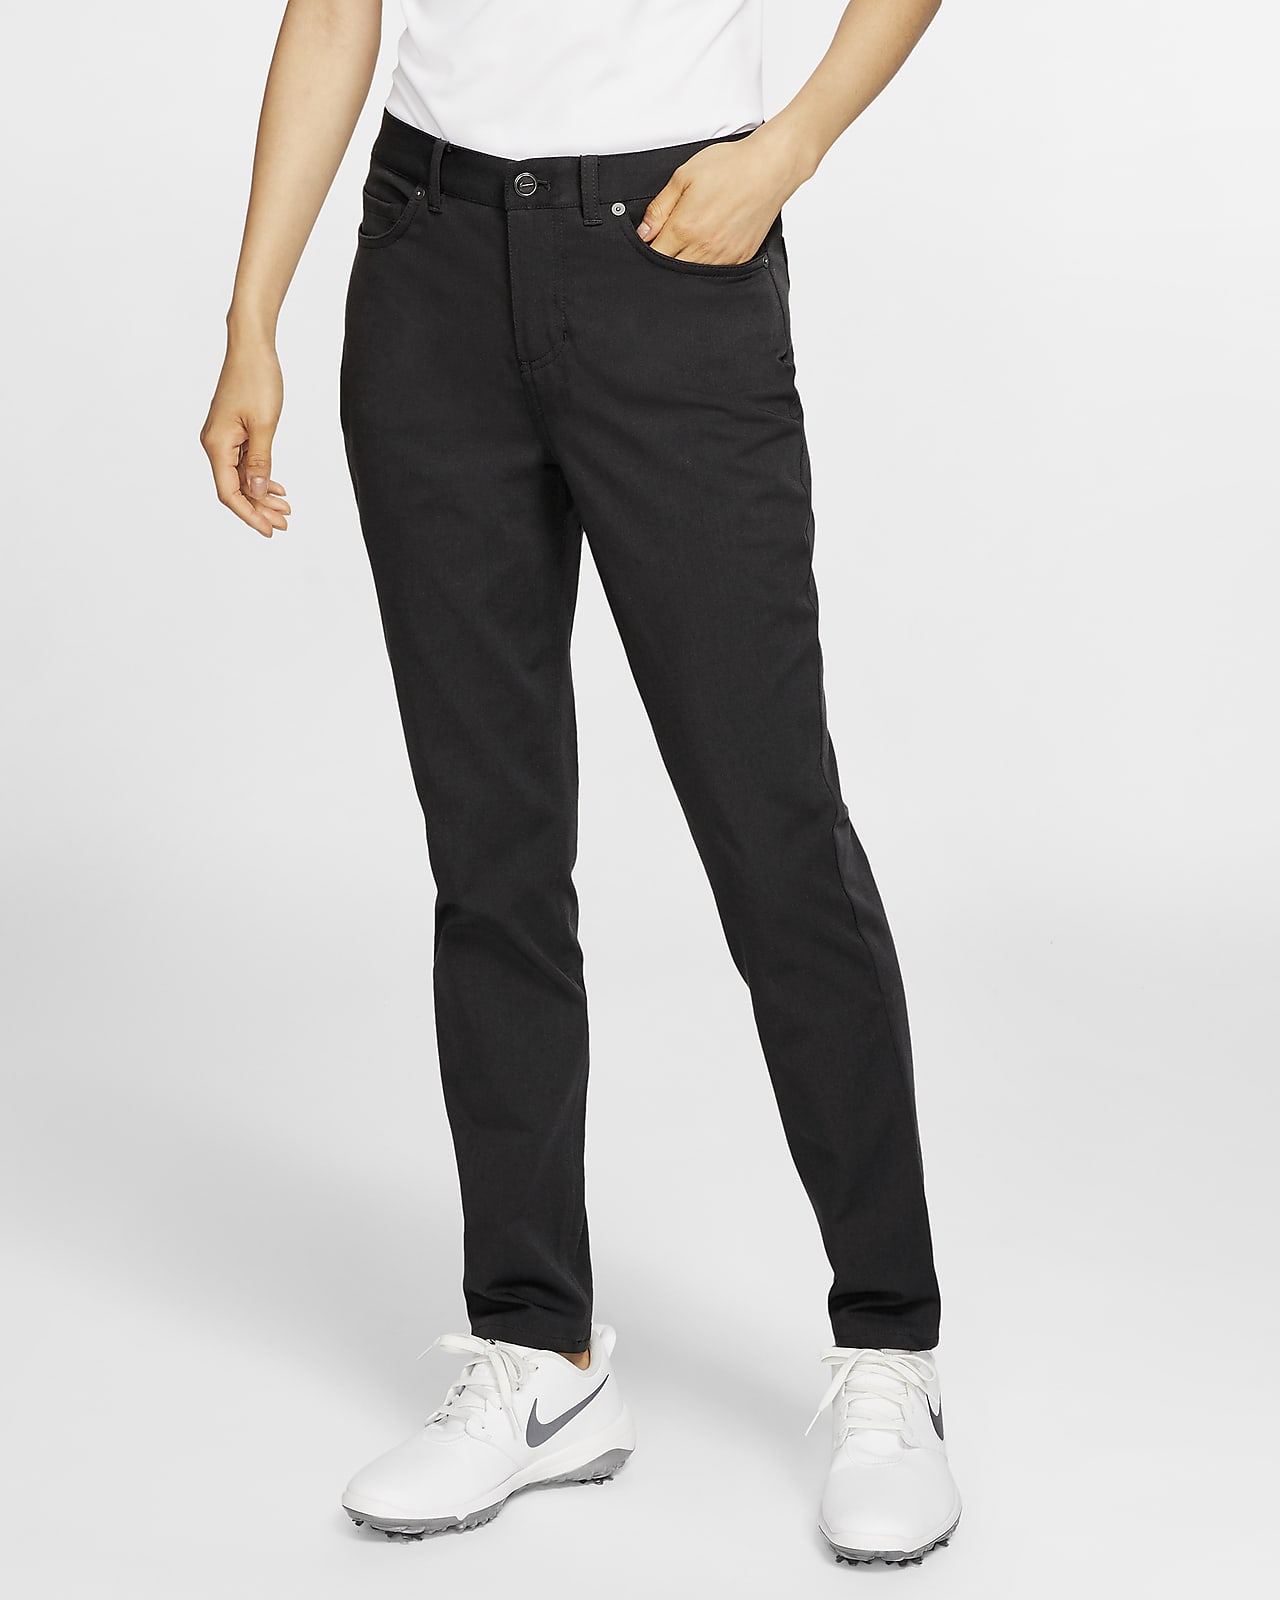 Nike Women's Slim Fit Golf Pants